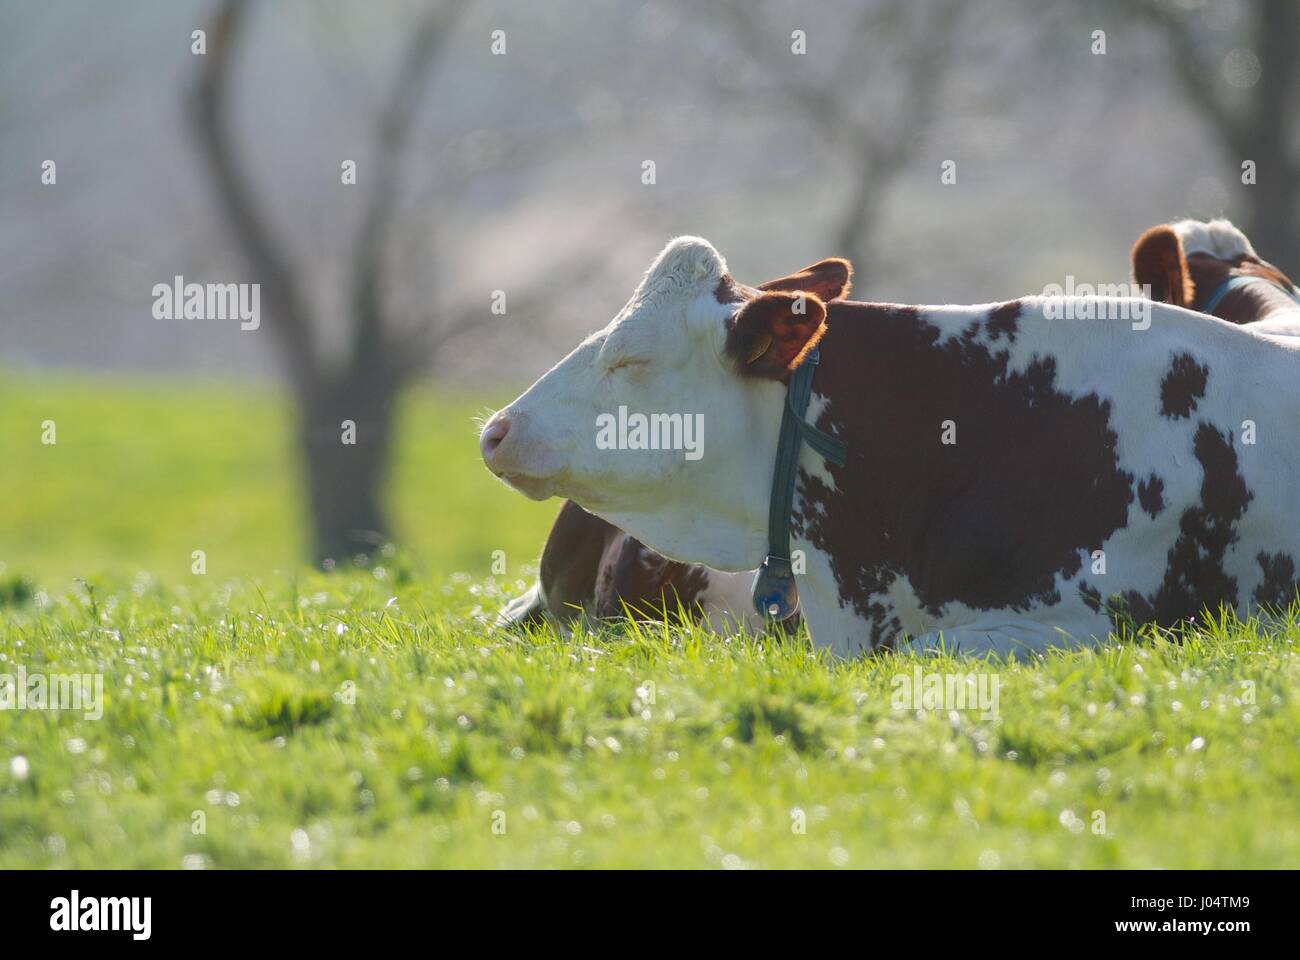 Sleepy cow in a field Stock Photo